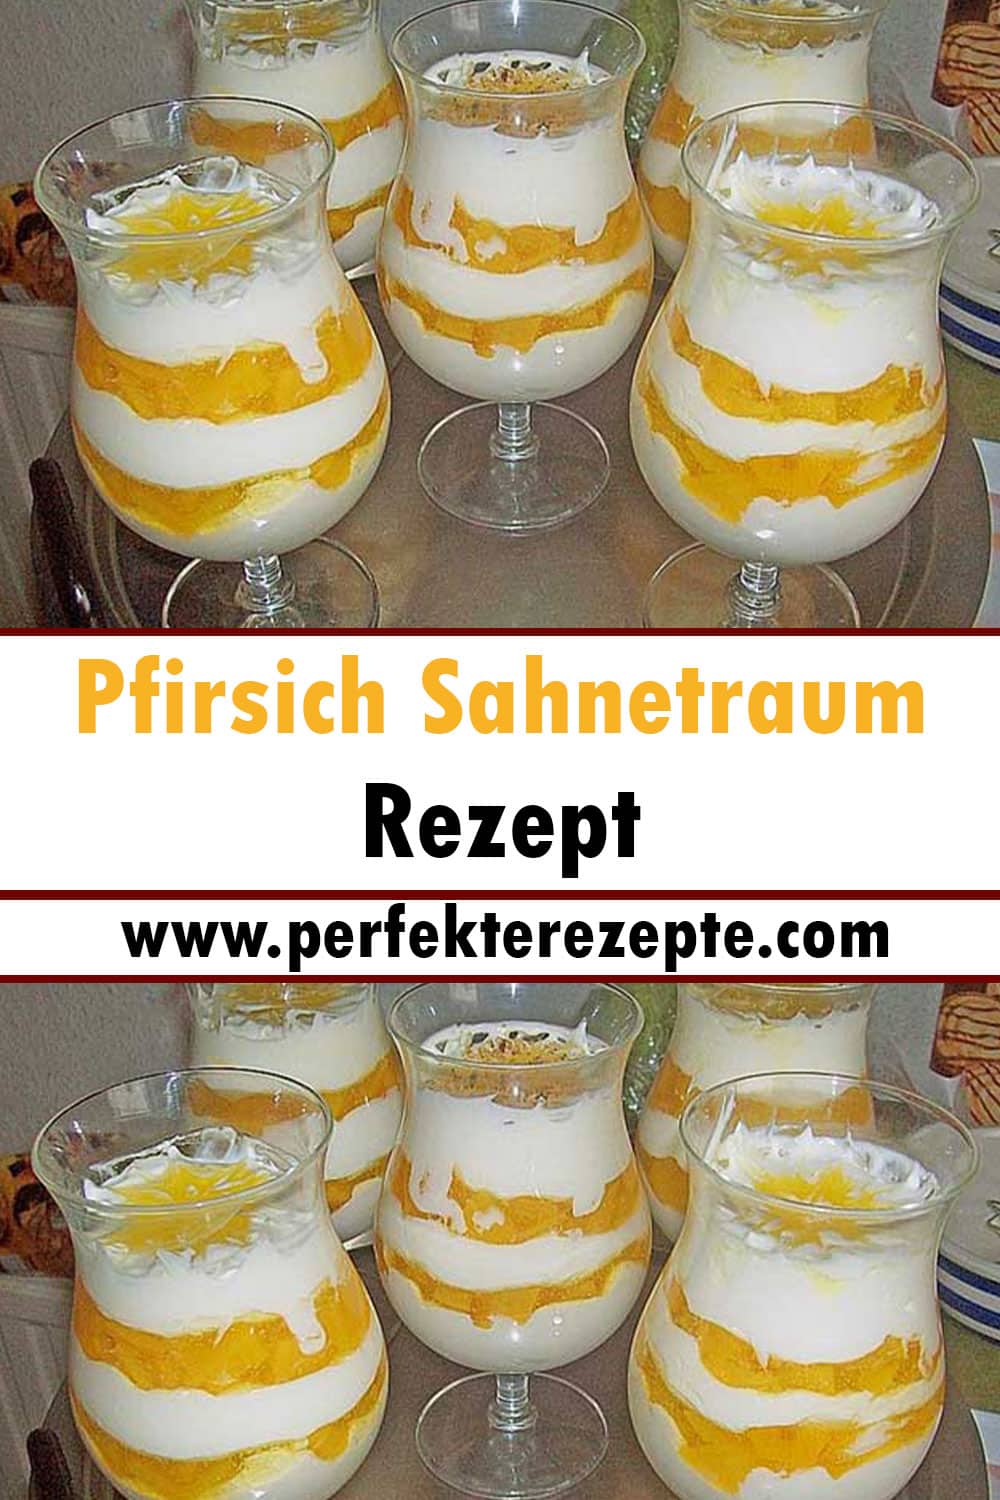 Pfirsich Sahnetraum Rezept